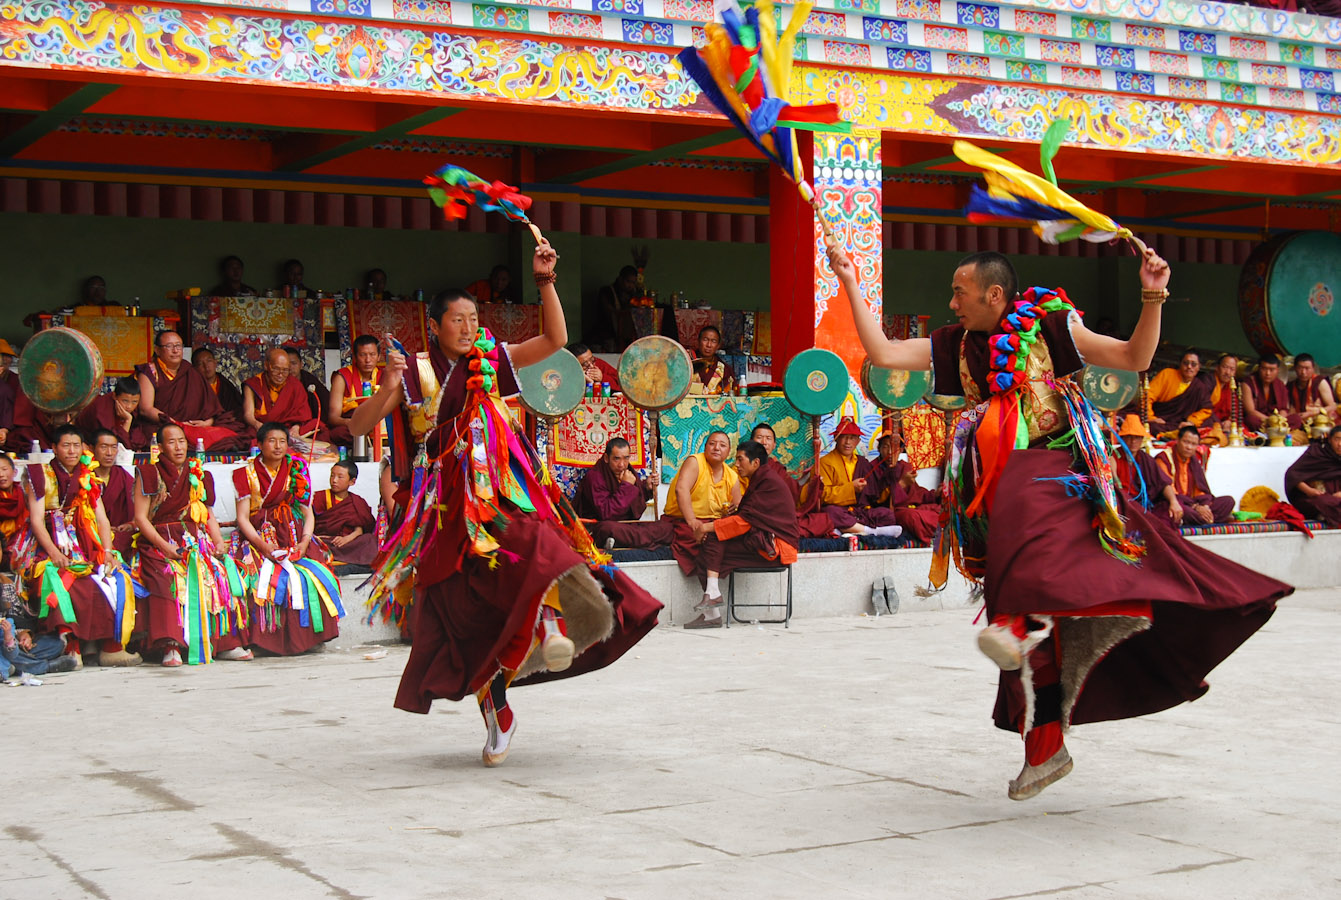 Cham, la danza sacra dei monaci tibetani